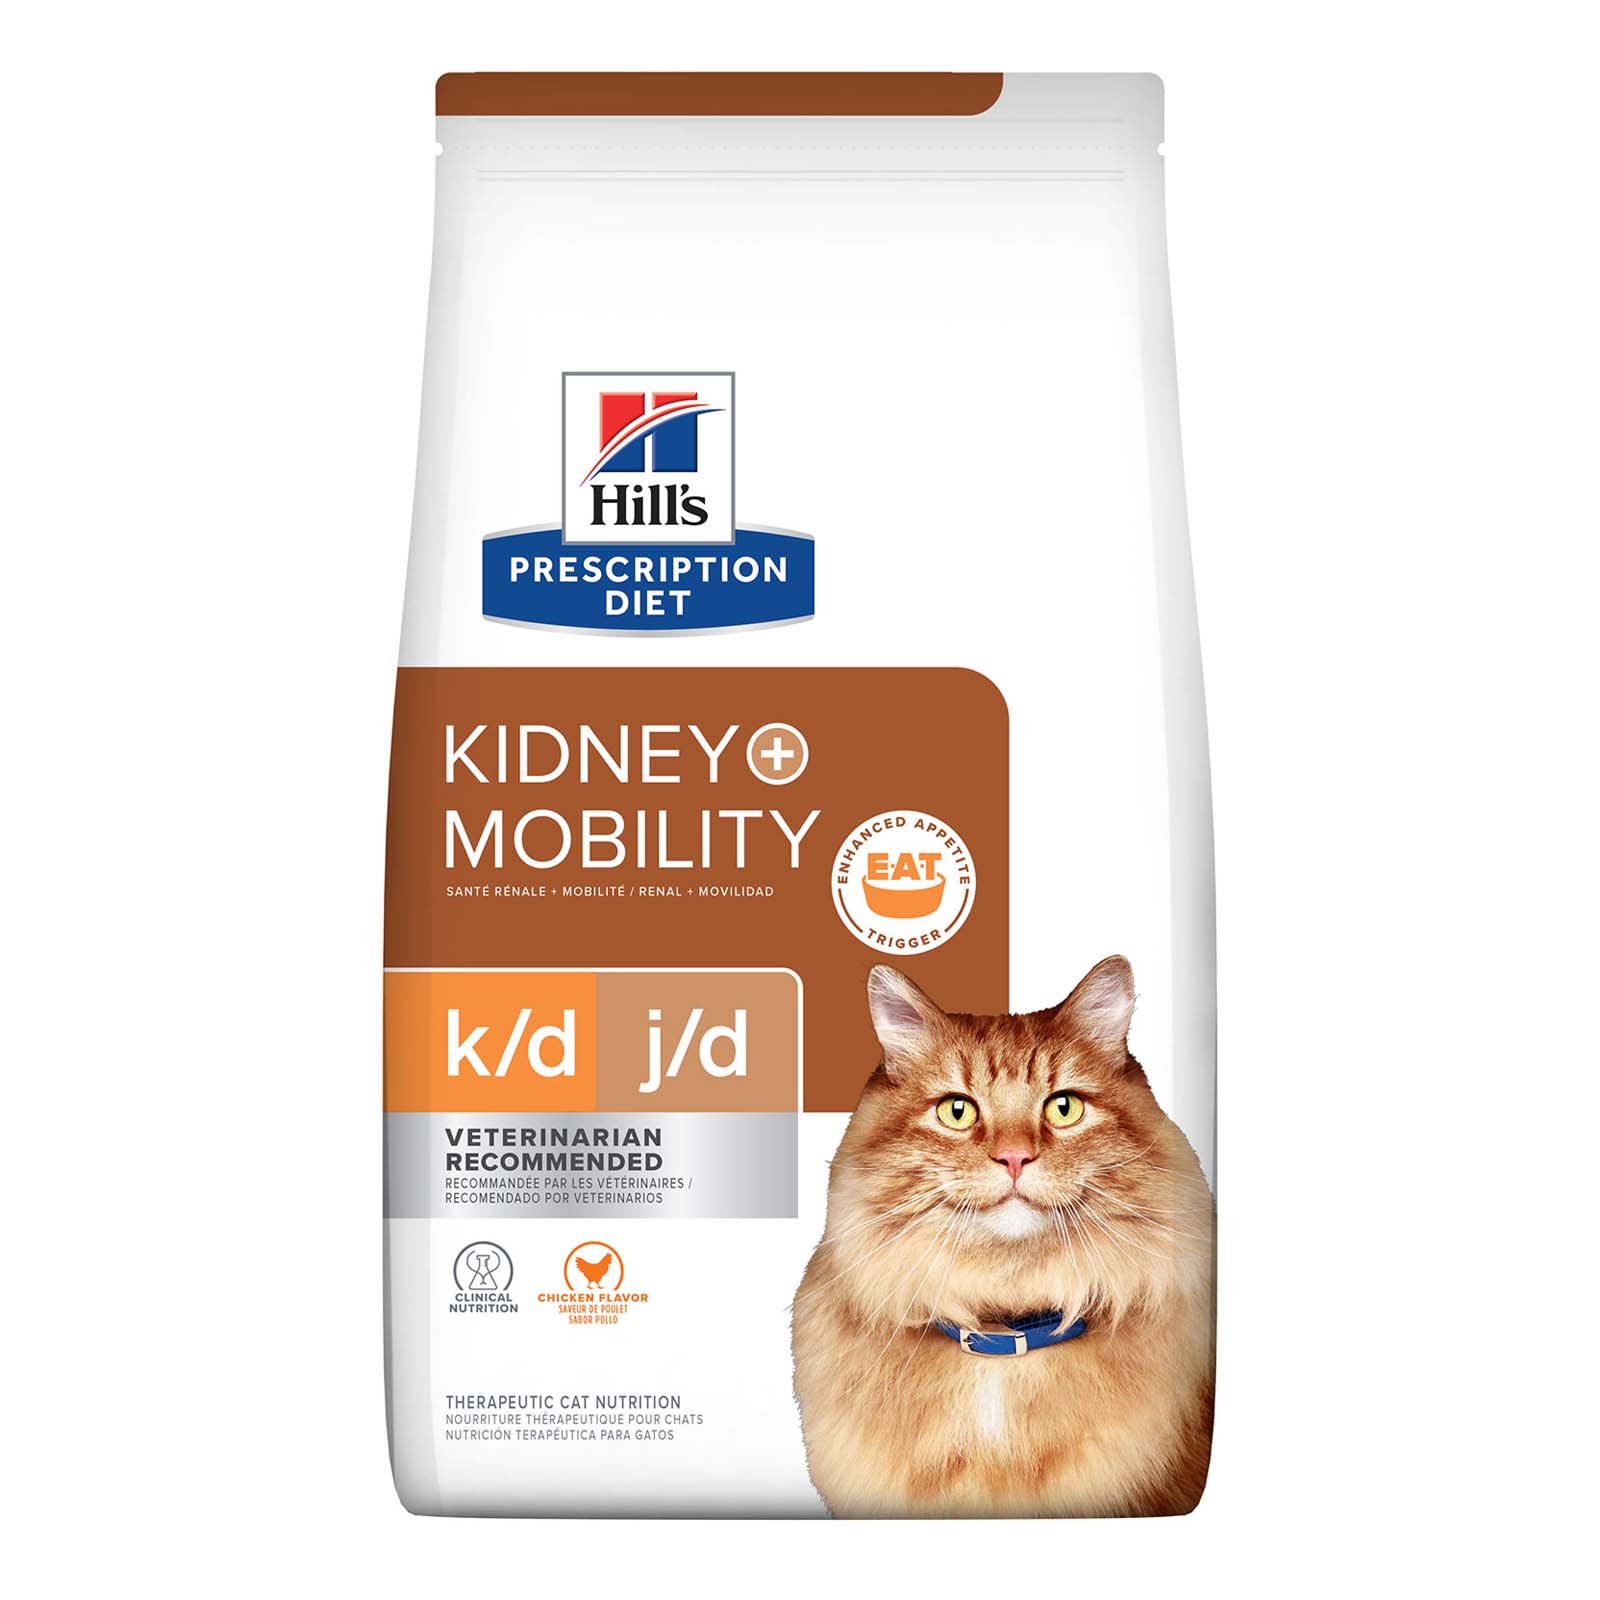 Hill's Prescription Diet k/d + Mobility Chicken Dry Cat Food